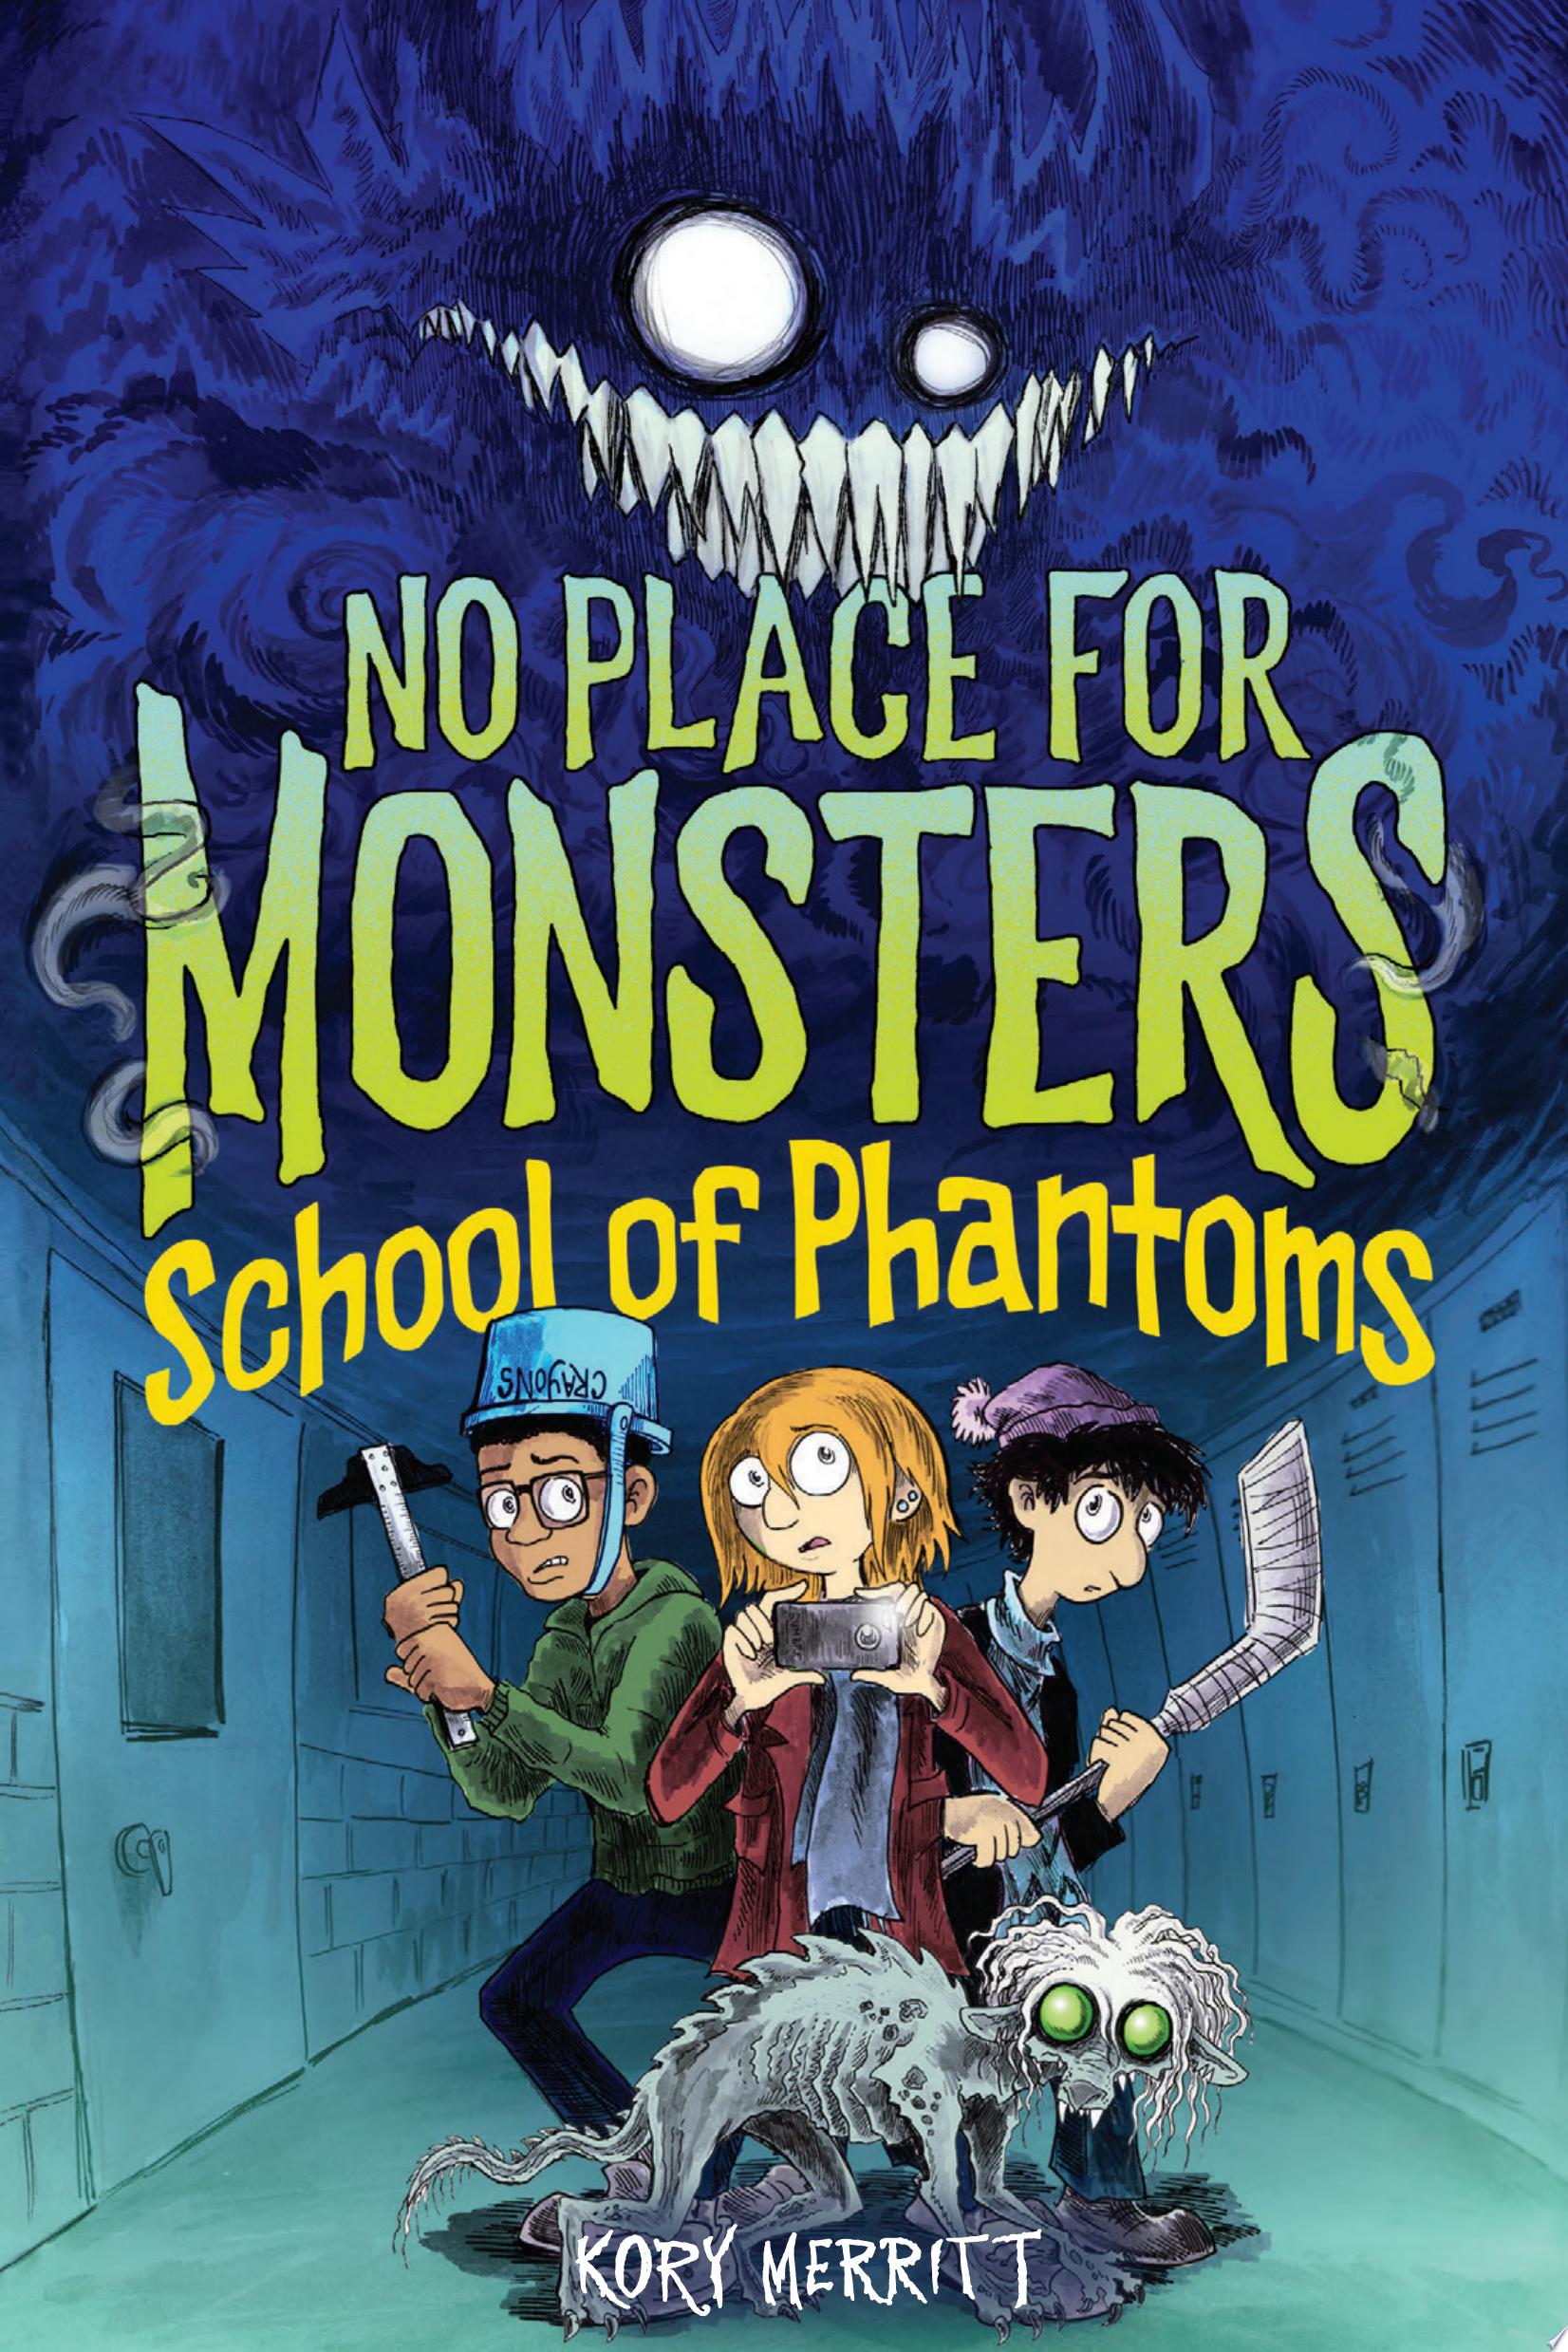 Image for "School of Phantoms"